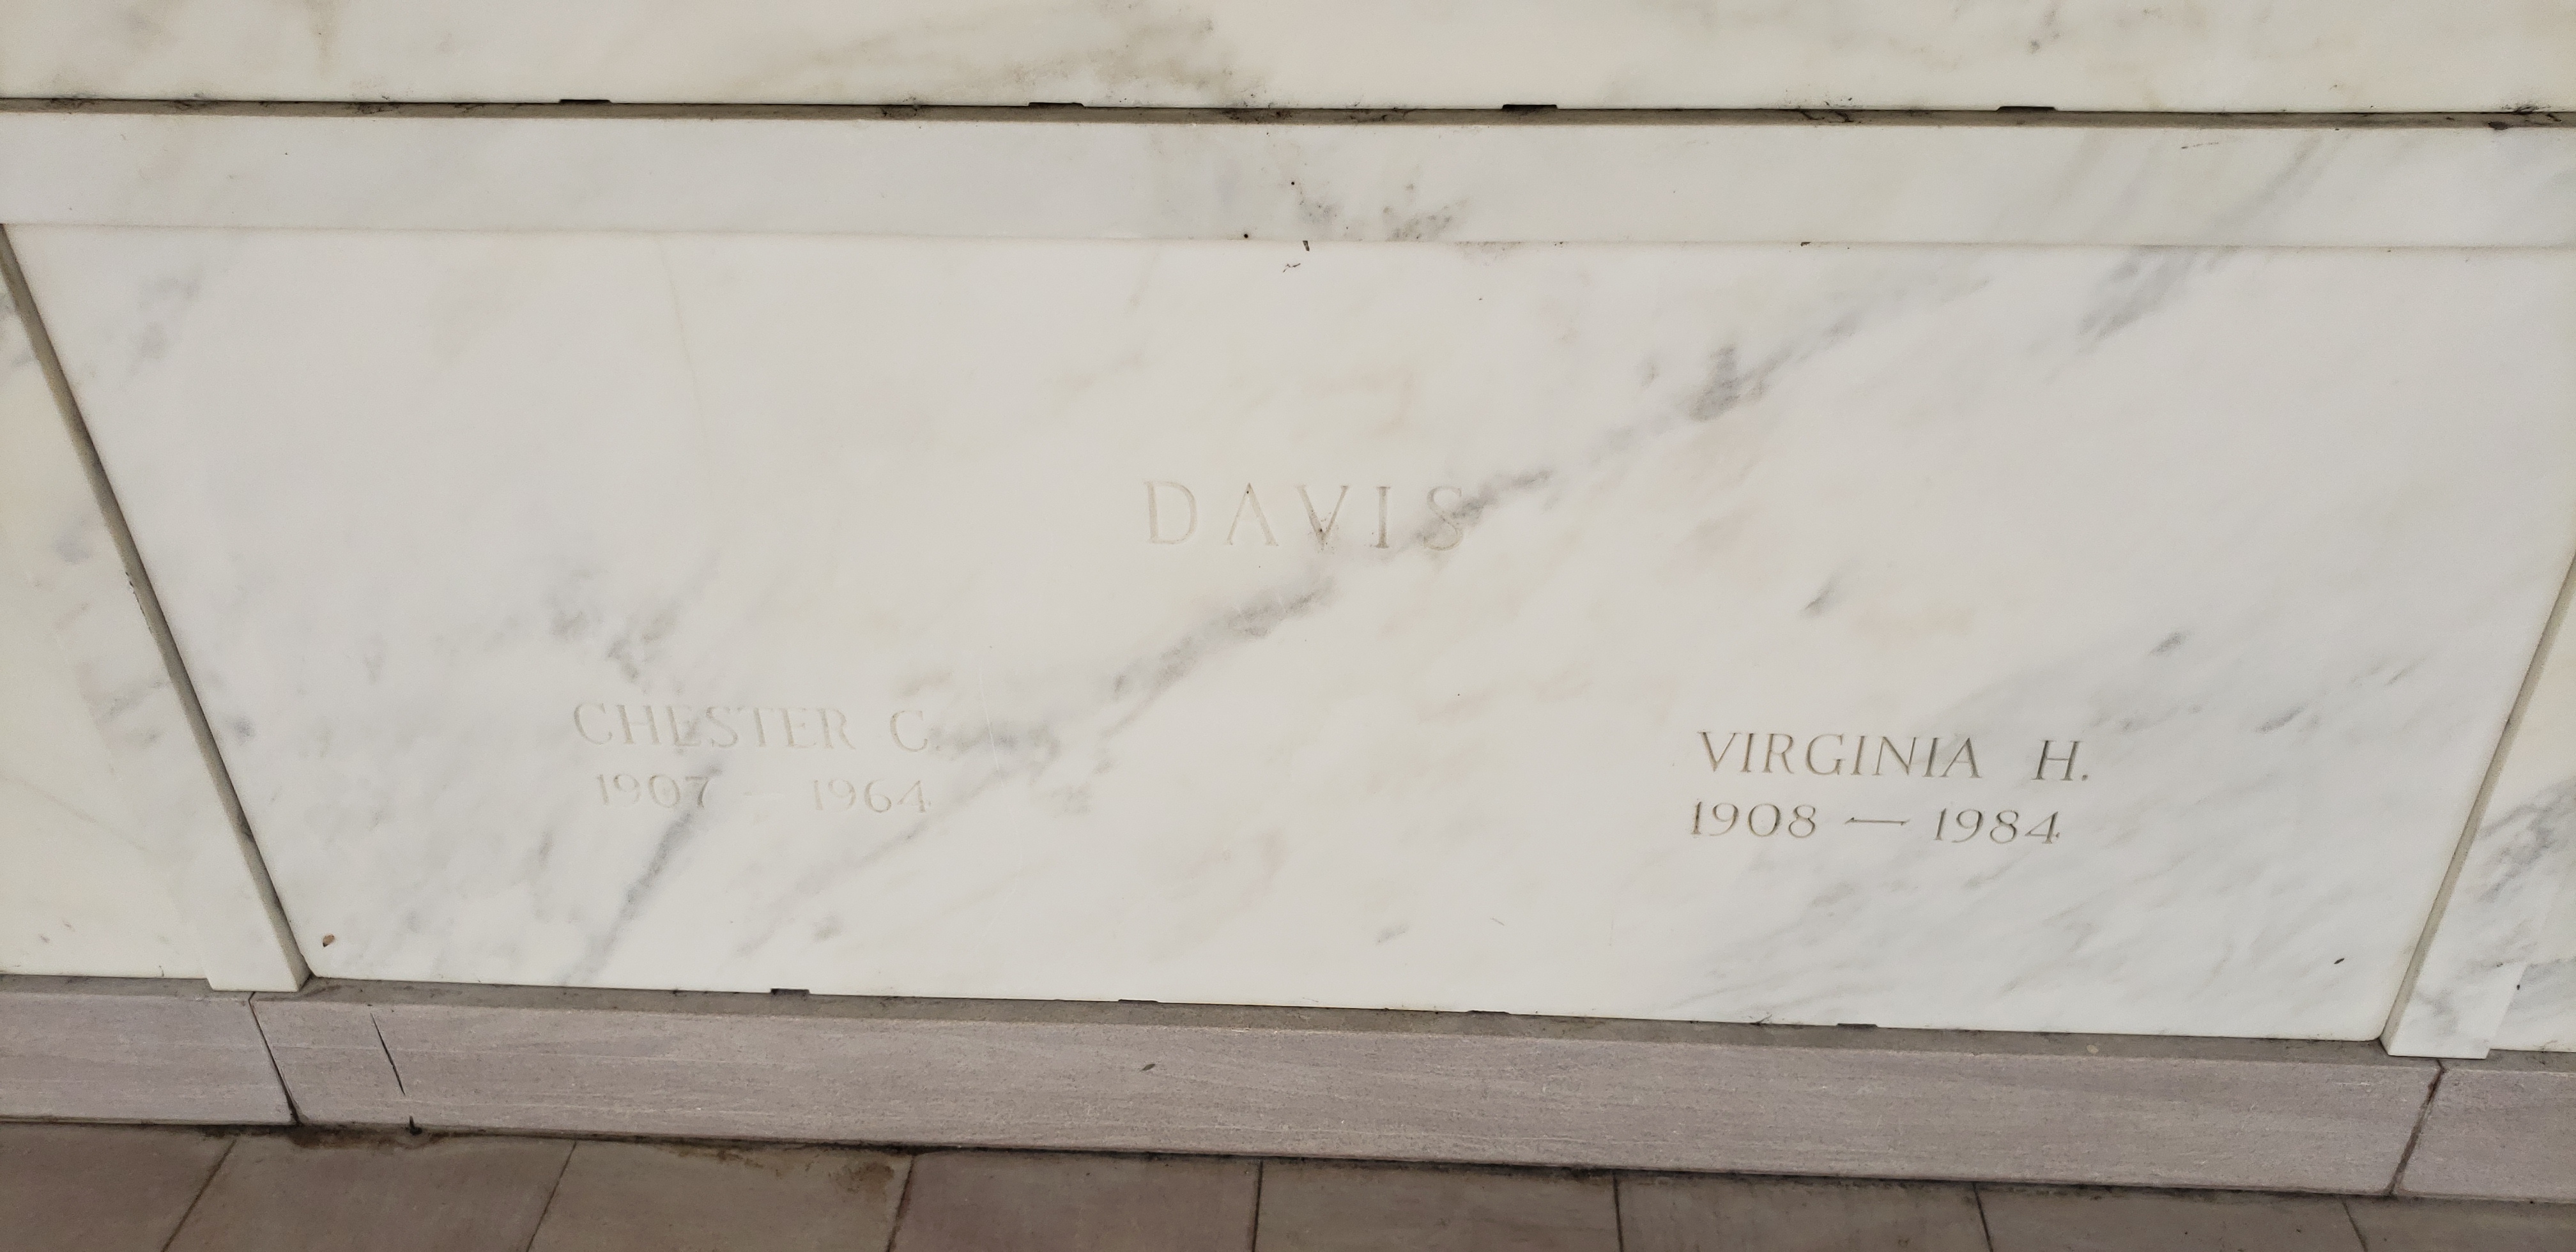 Virginia H Davis